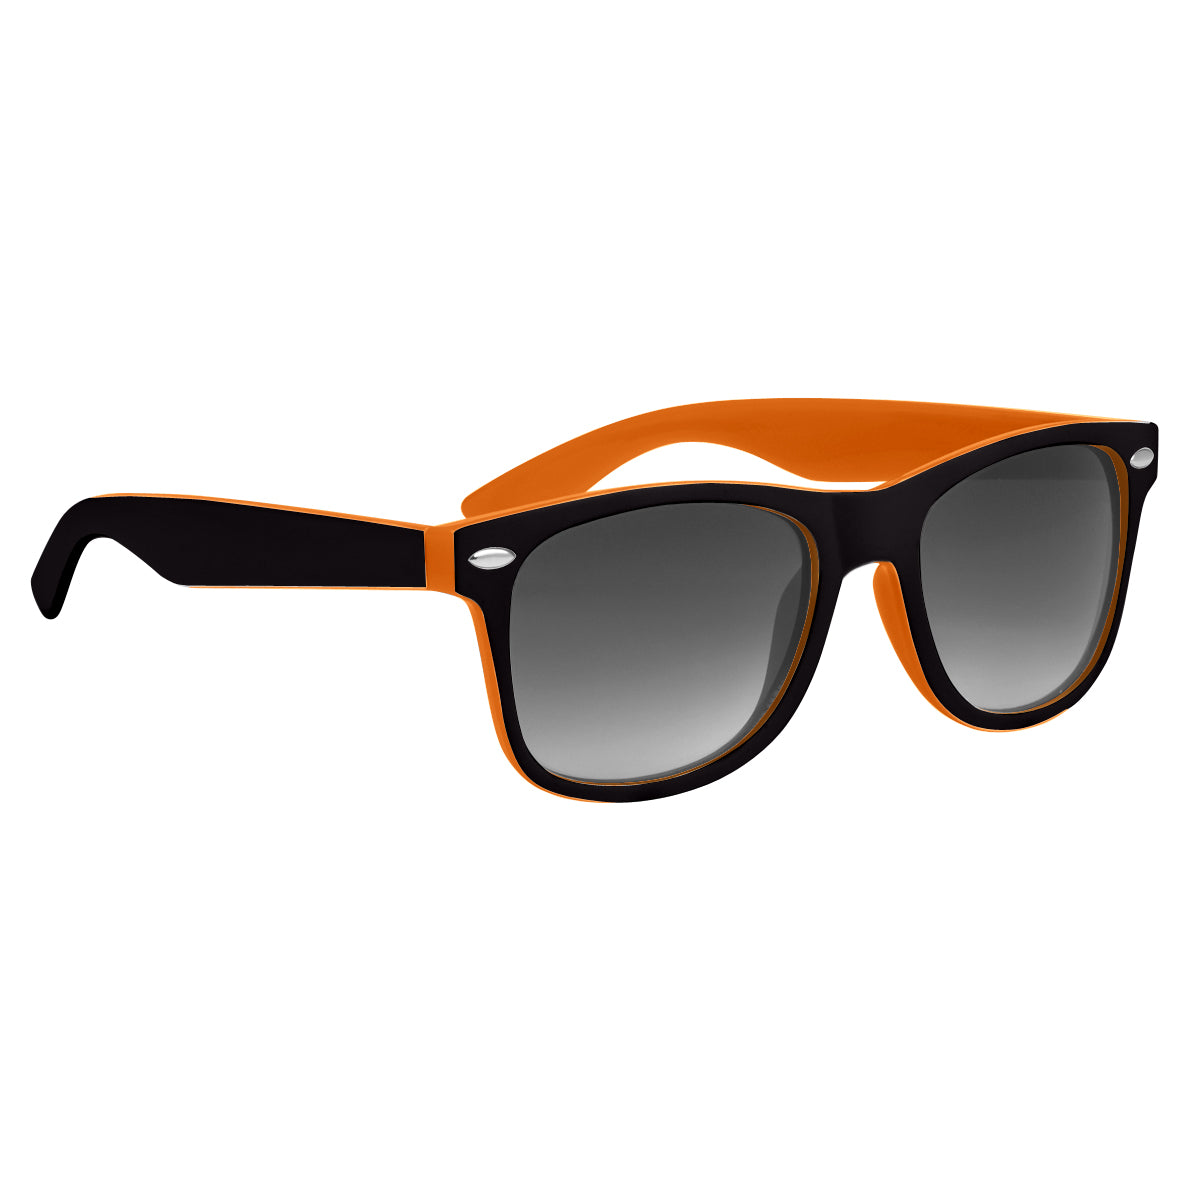 Two-Tone Malibu Sunglasses Sunglasses Hit Promo Orange & Black Single Color 